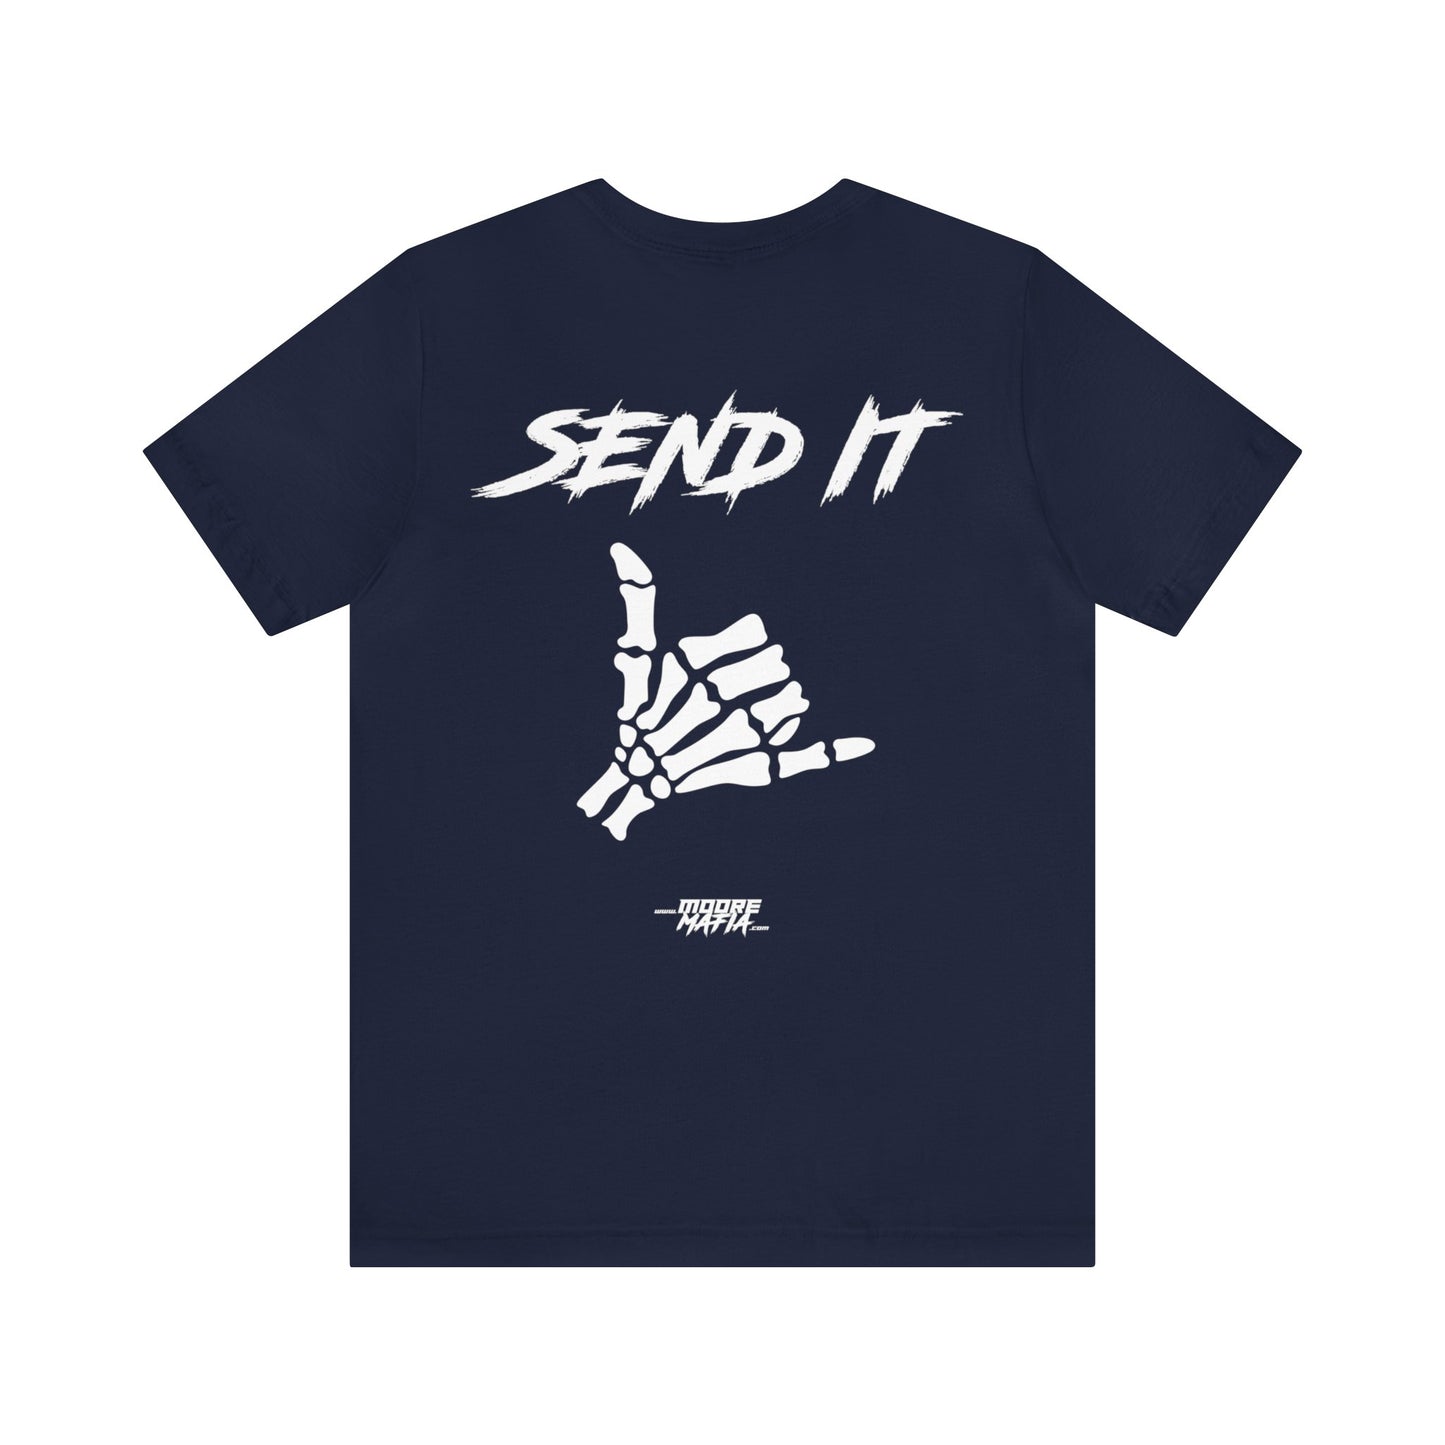 Send It Unisex T-Shirt